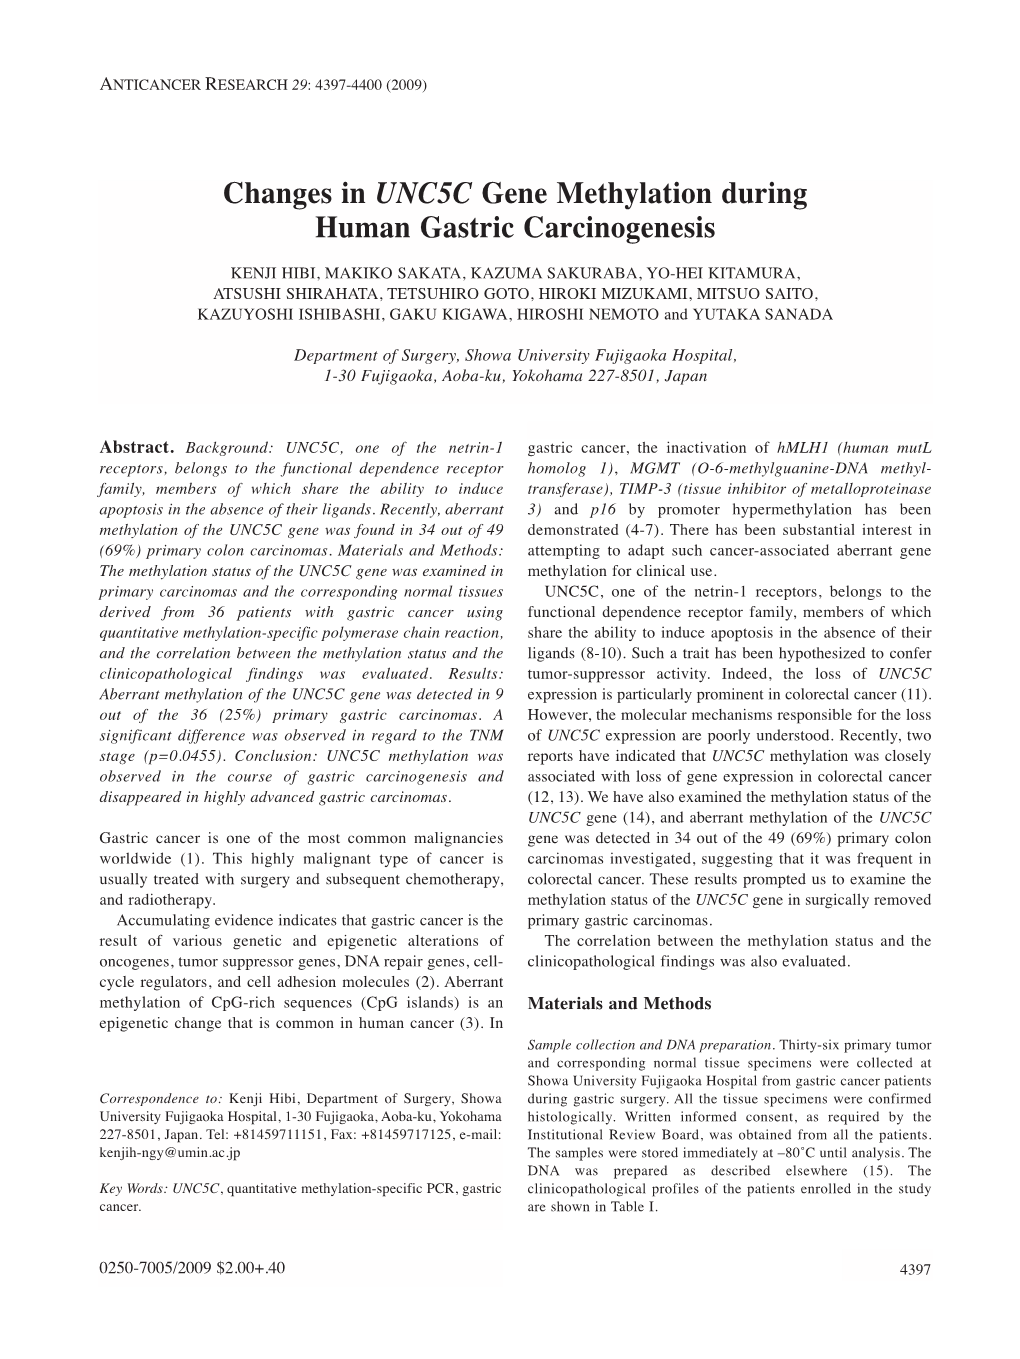 Changes in UNC5C Gene Methylation During Human Gastric Carcinogenesis